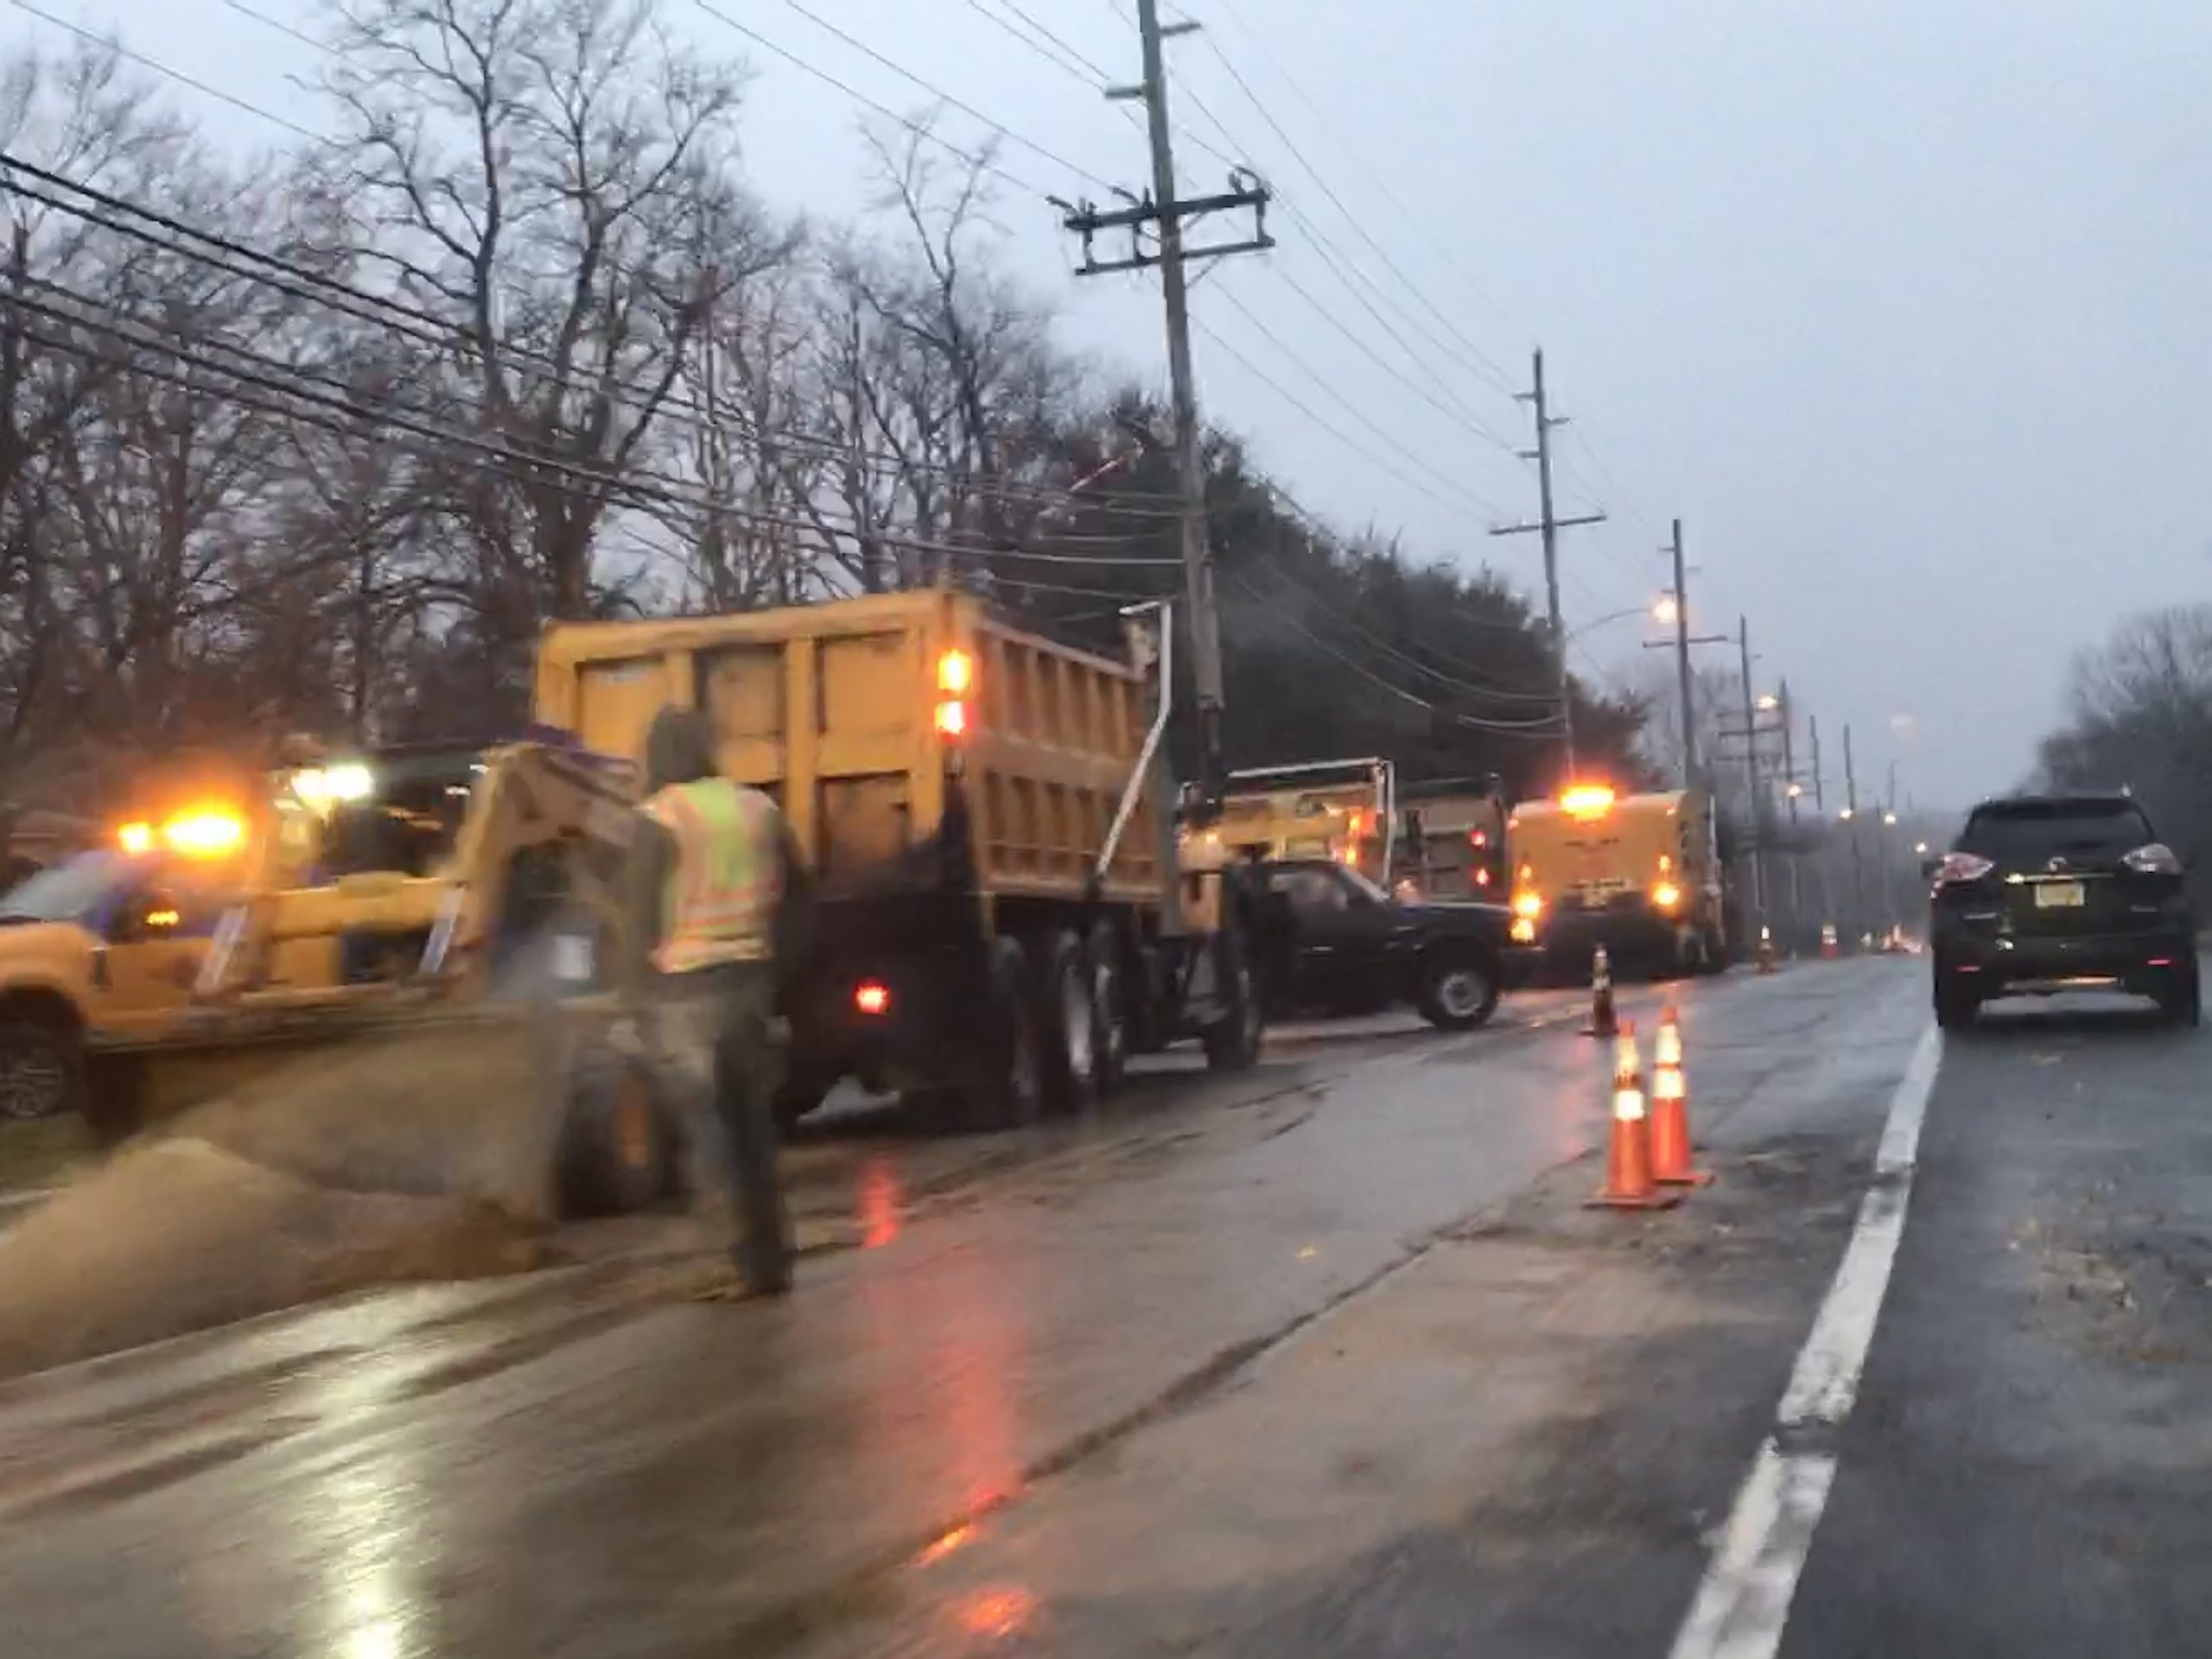 Traffic slows as drainage work closes one side of Herbertsville Road, Feb. 25, 2020. (Photo: Daniel Nee)